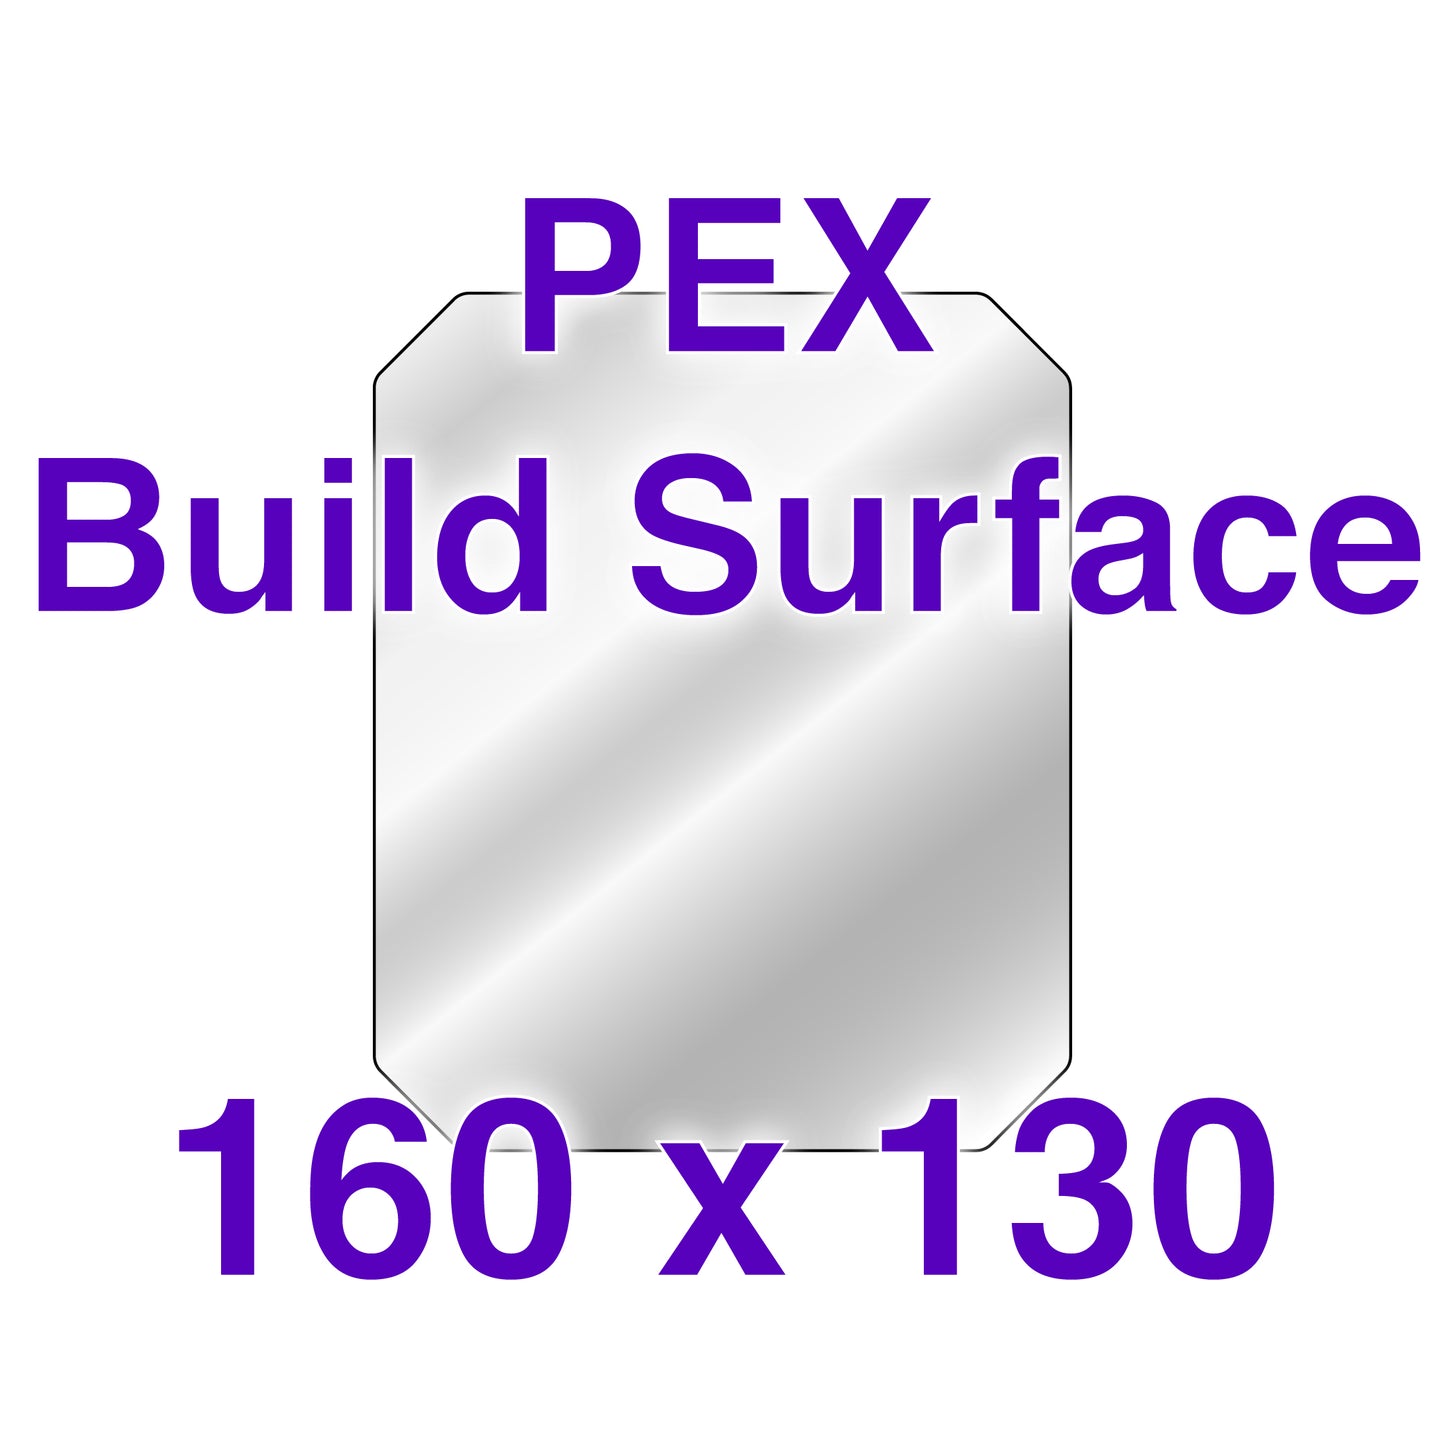 PEX Build Surface (0.19mm) - 160 x 130